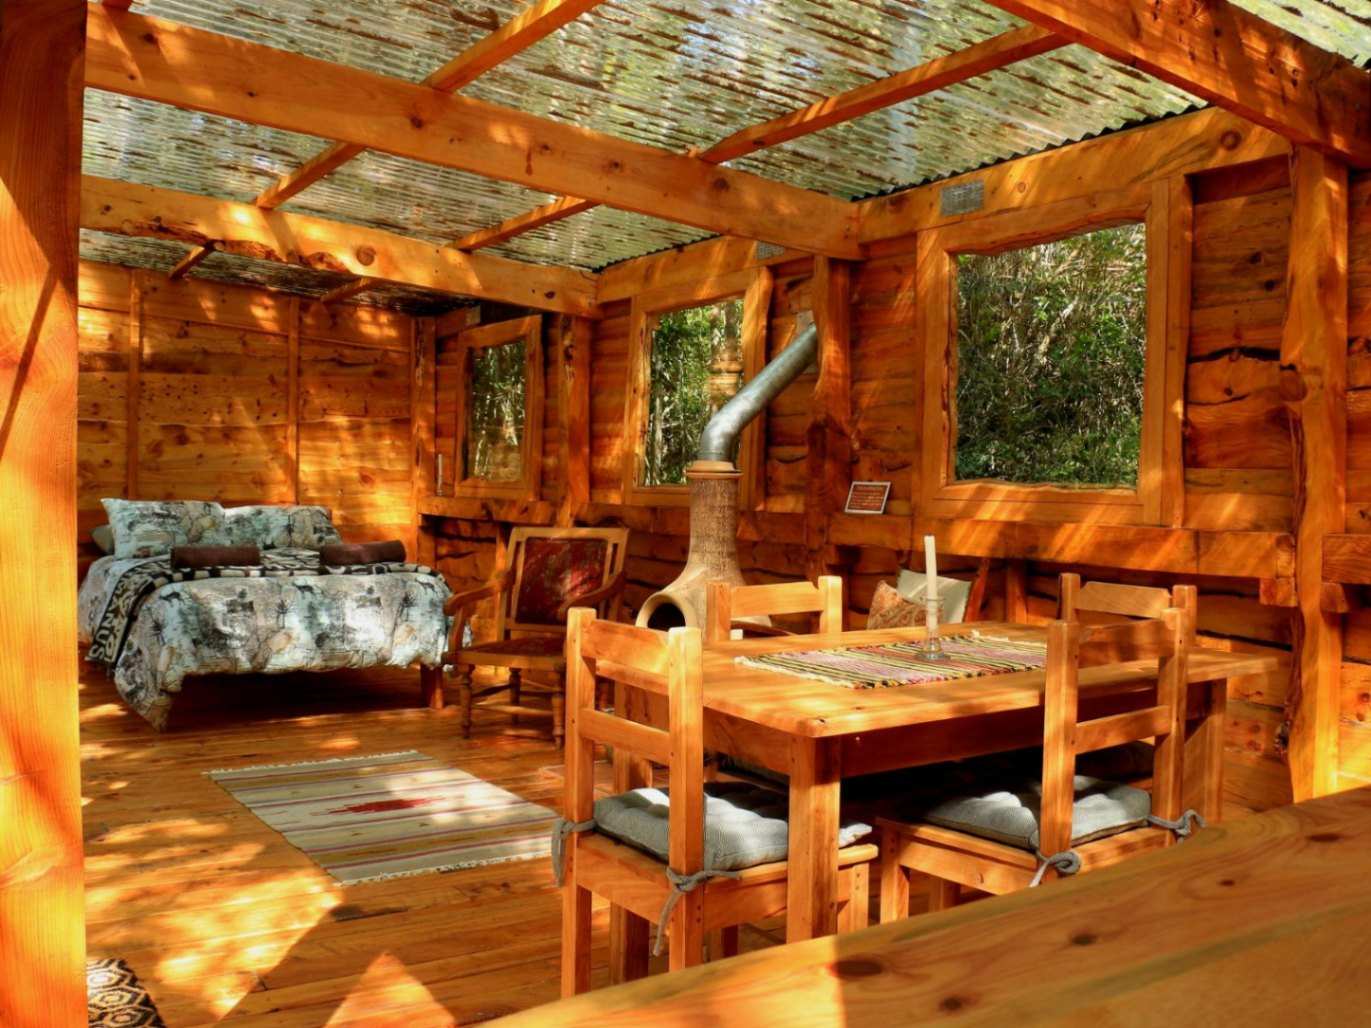 Platbos Forest Cabin Interior